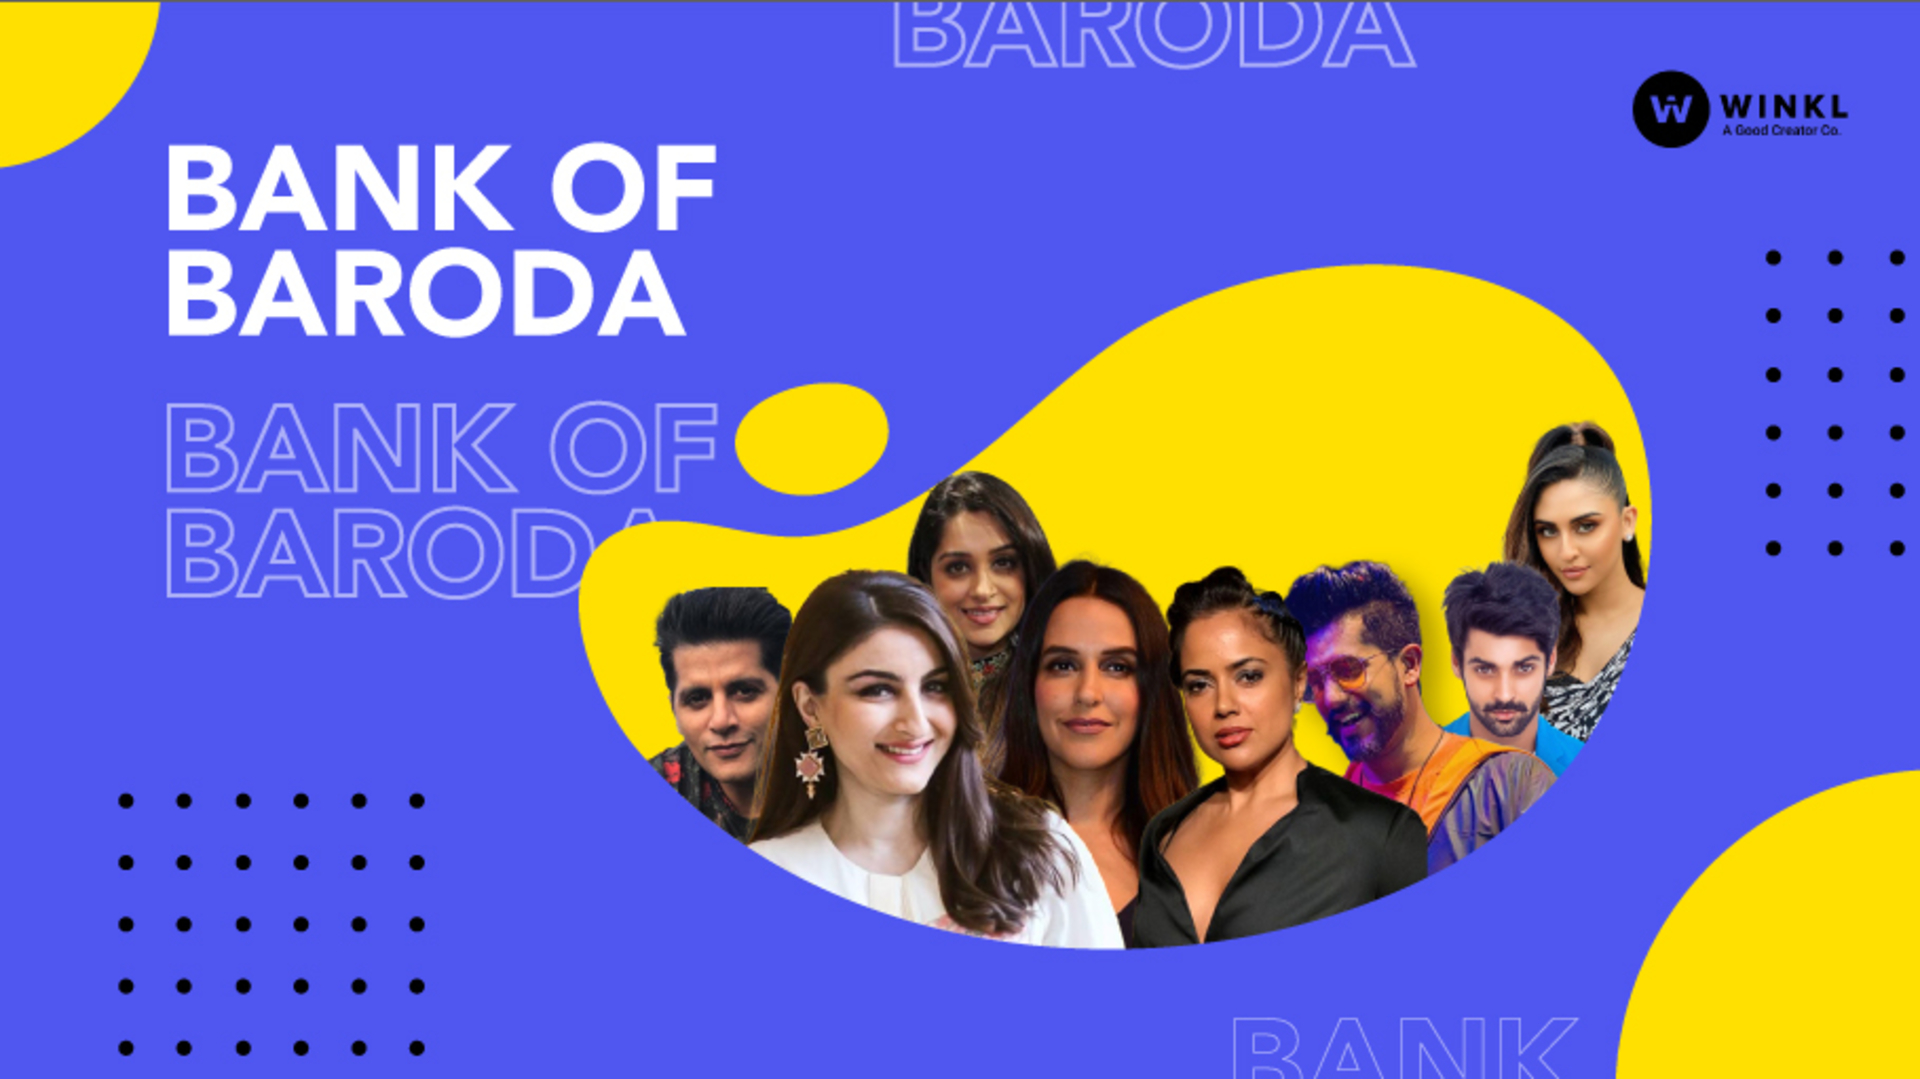 Bank of Baroda: Evoking strong emotions through Influencer Marketing - blog by Winkl (An influencer marketing platform)